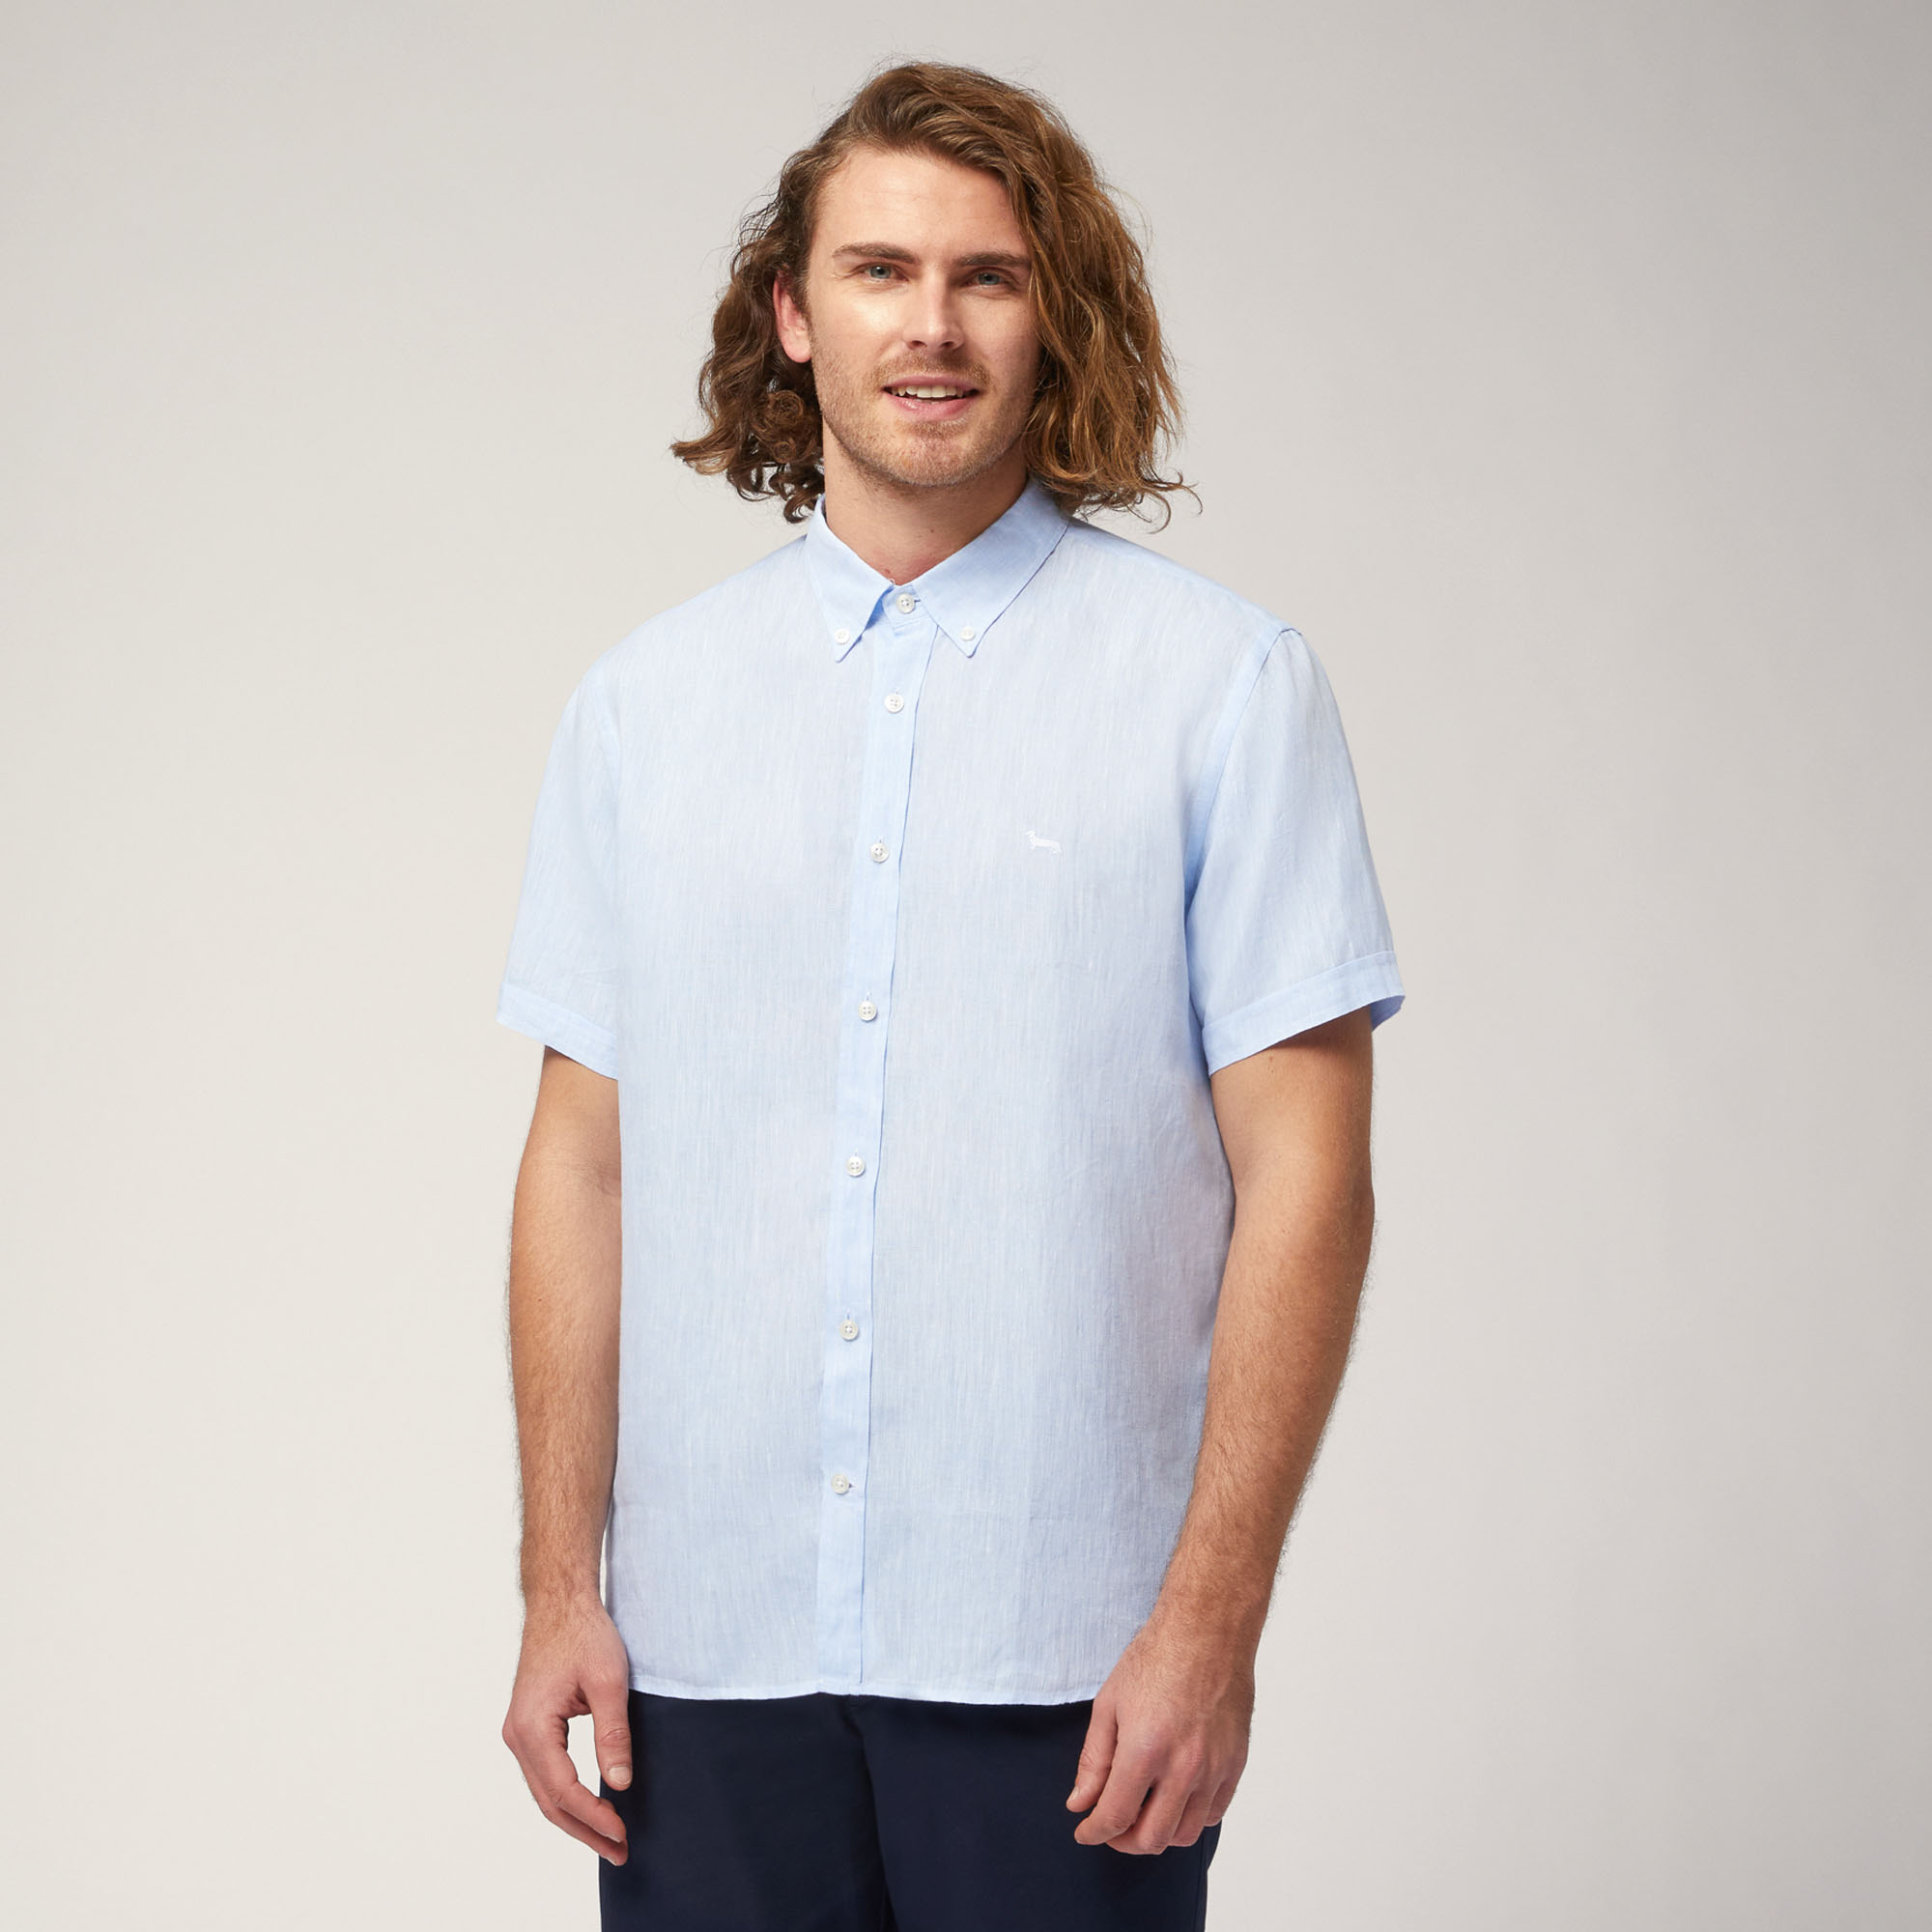 Linen Short-Sleeved Shirt, Sky Blue, large